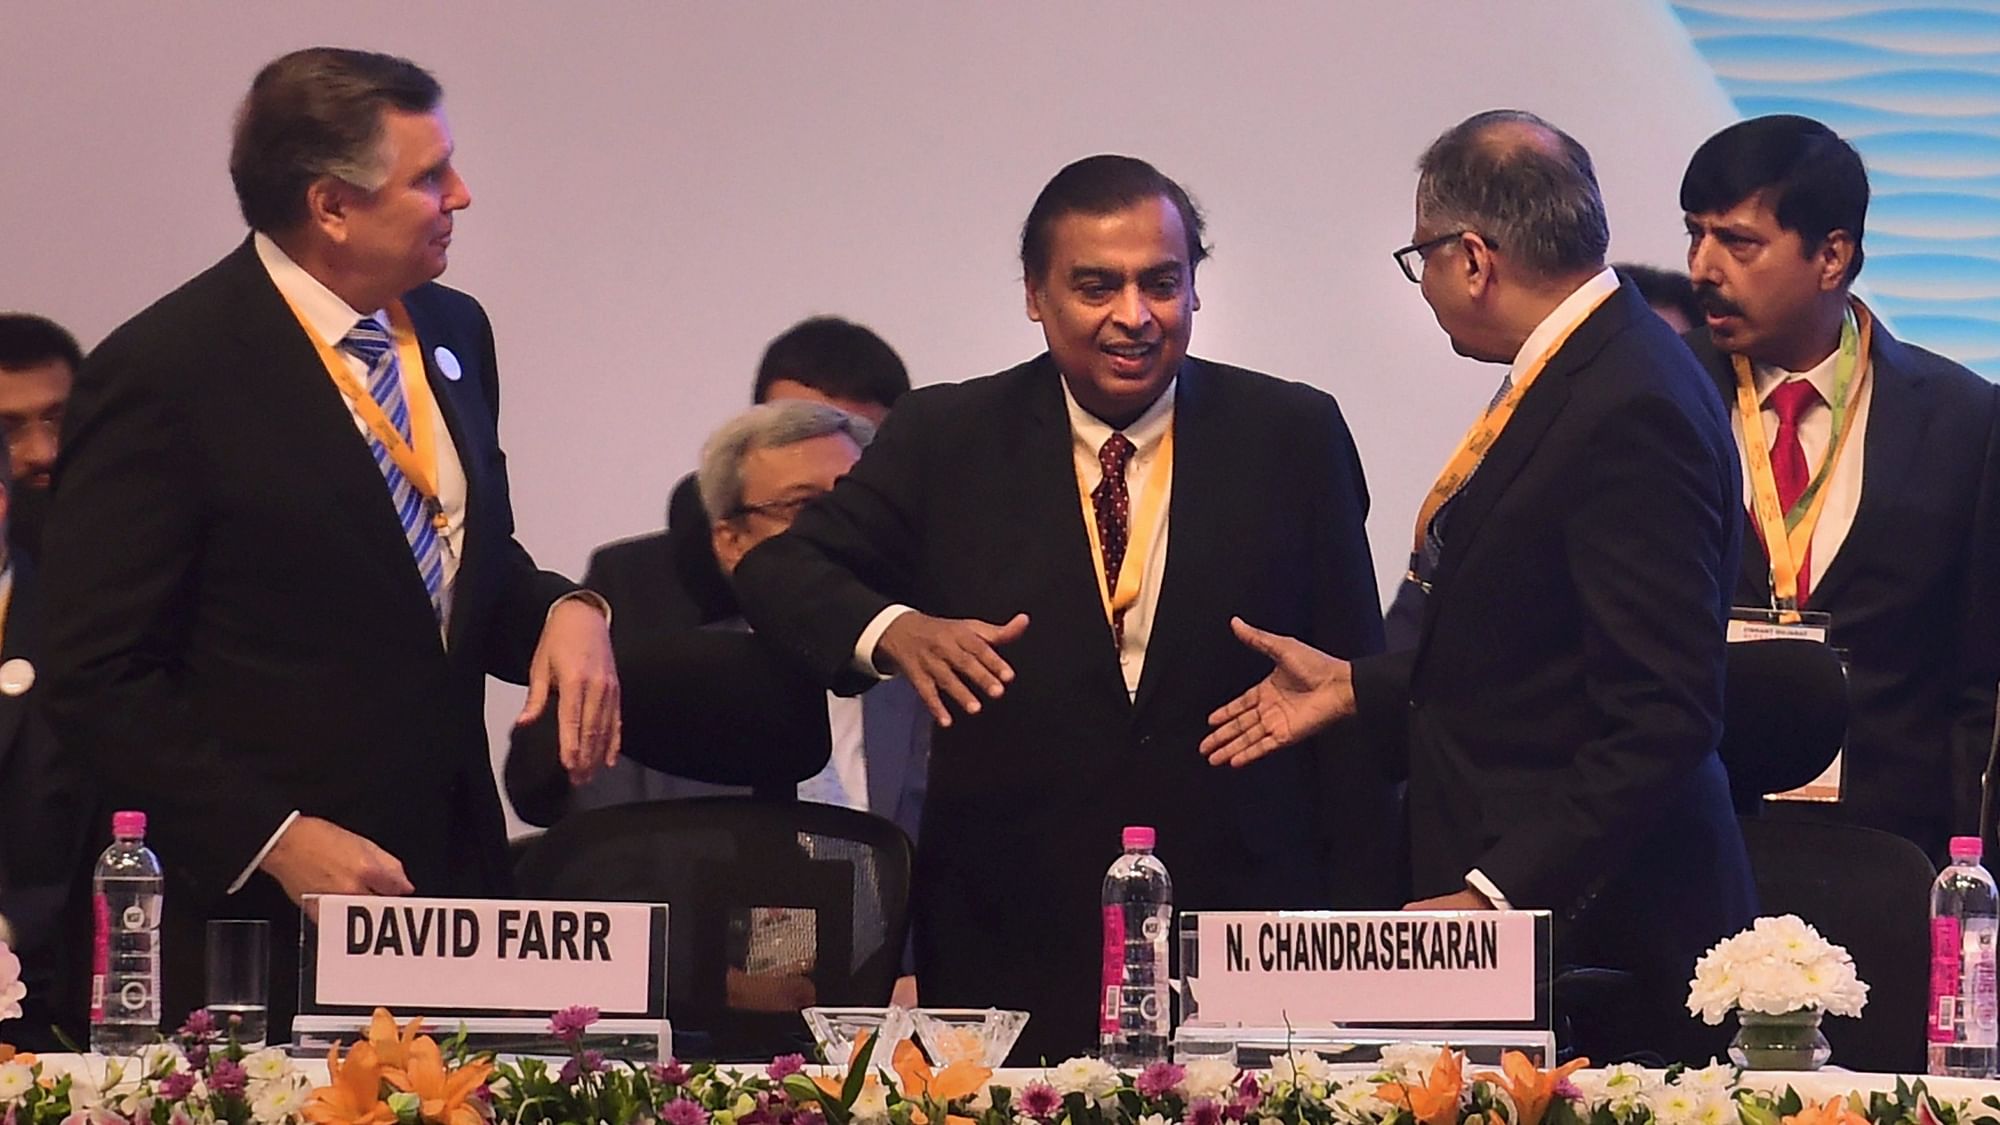  Tata Sons Chairperson Natarajan Chandrasekaran shakes hands with Reliance Industries Chairman Mukesh Ambani (Center) at the 9th edition of Vibrant Gujarat Global Summit-2019, in Gandhinagar on 18 Jan 2019.&nbsp;